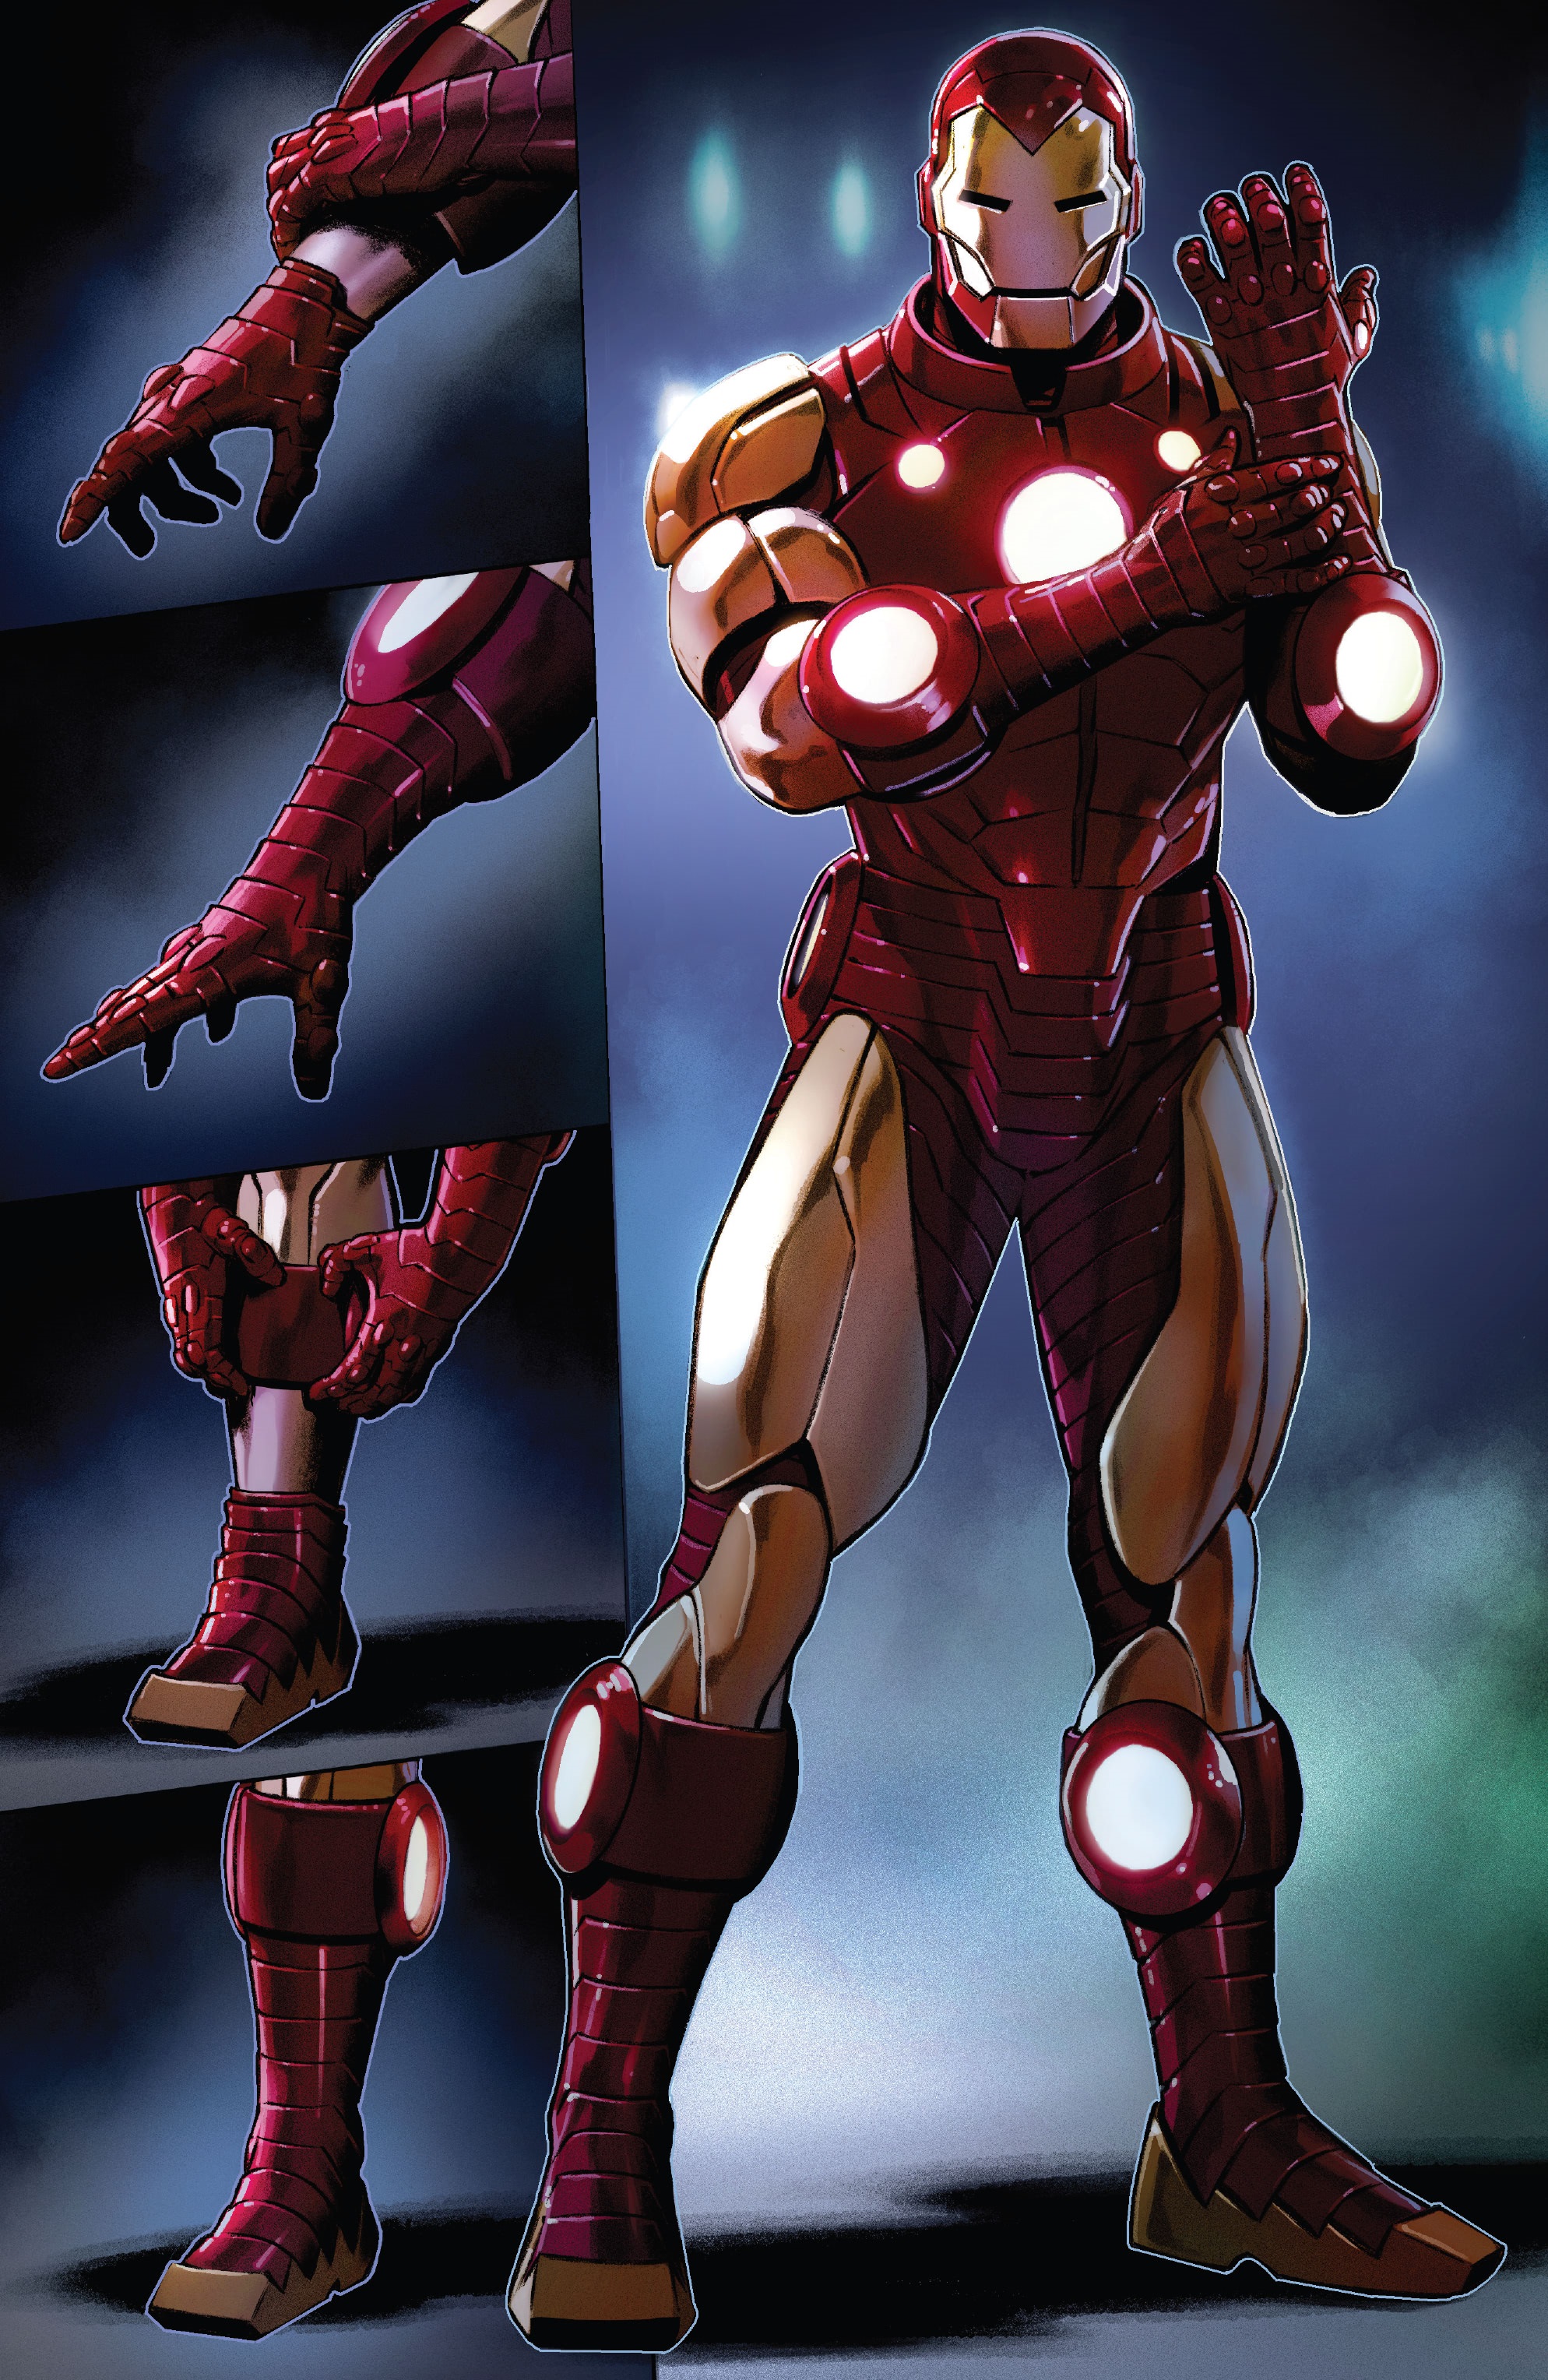 MARVEL COMICS ACTION SPIDER MAN,MARVEL SUPER HEROES,AVENGERS,IRON FANTASTIC 4 